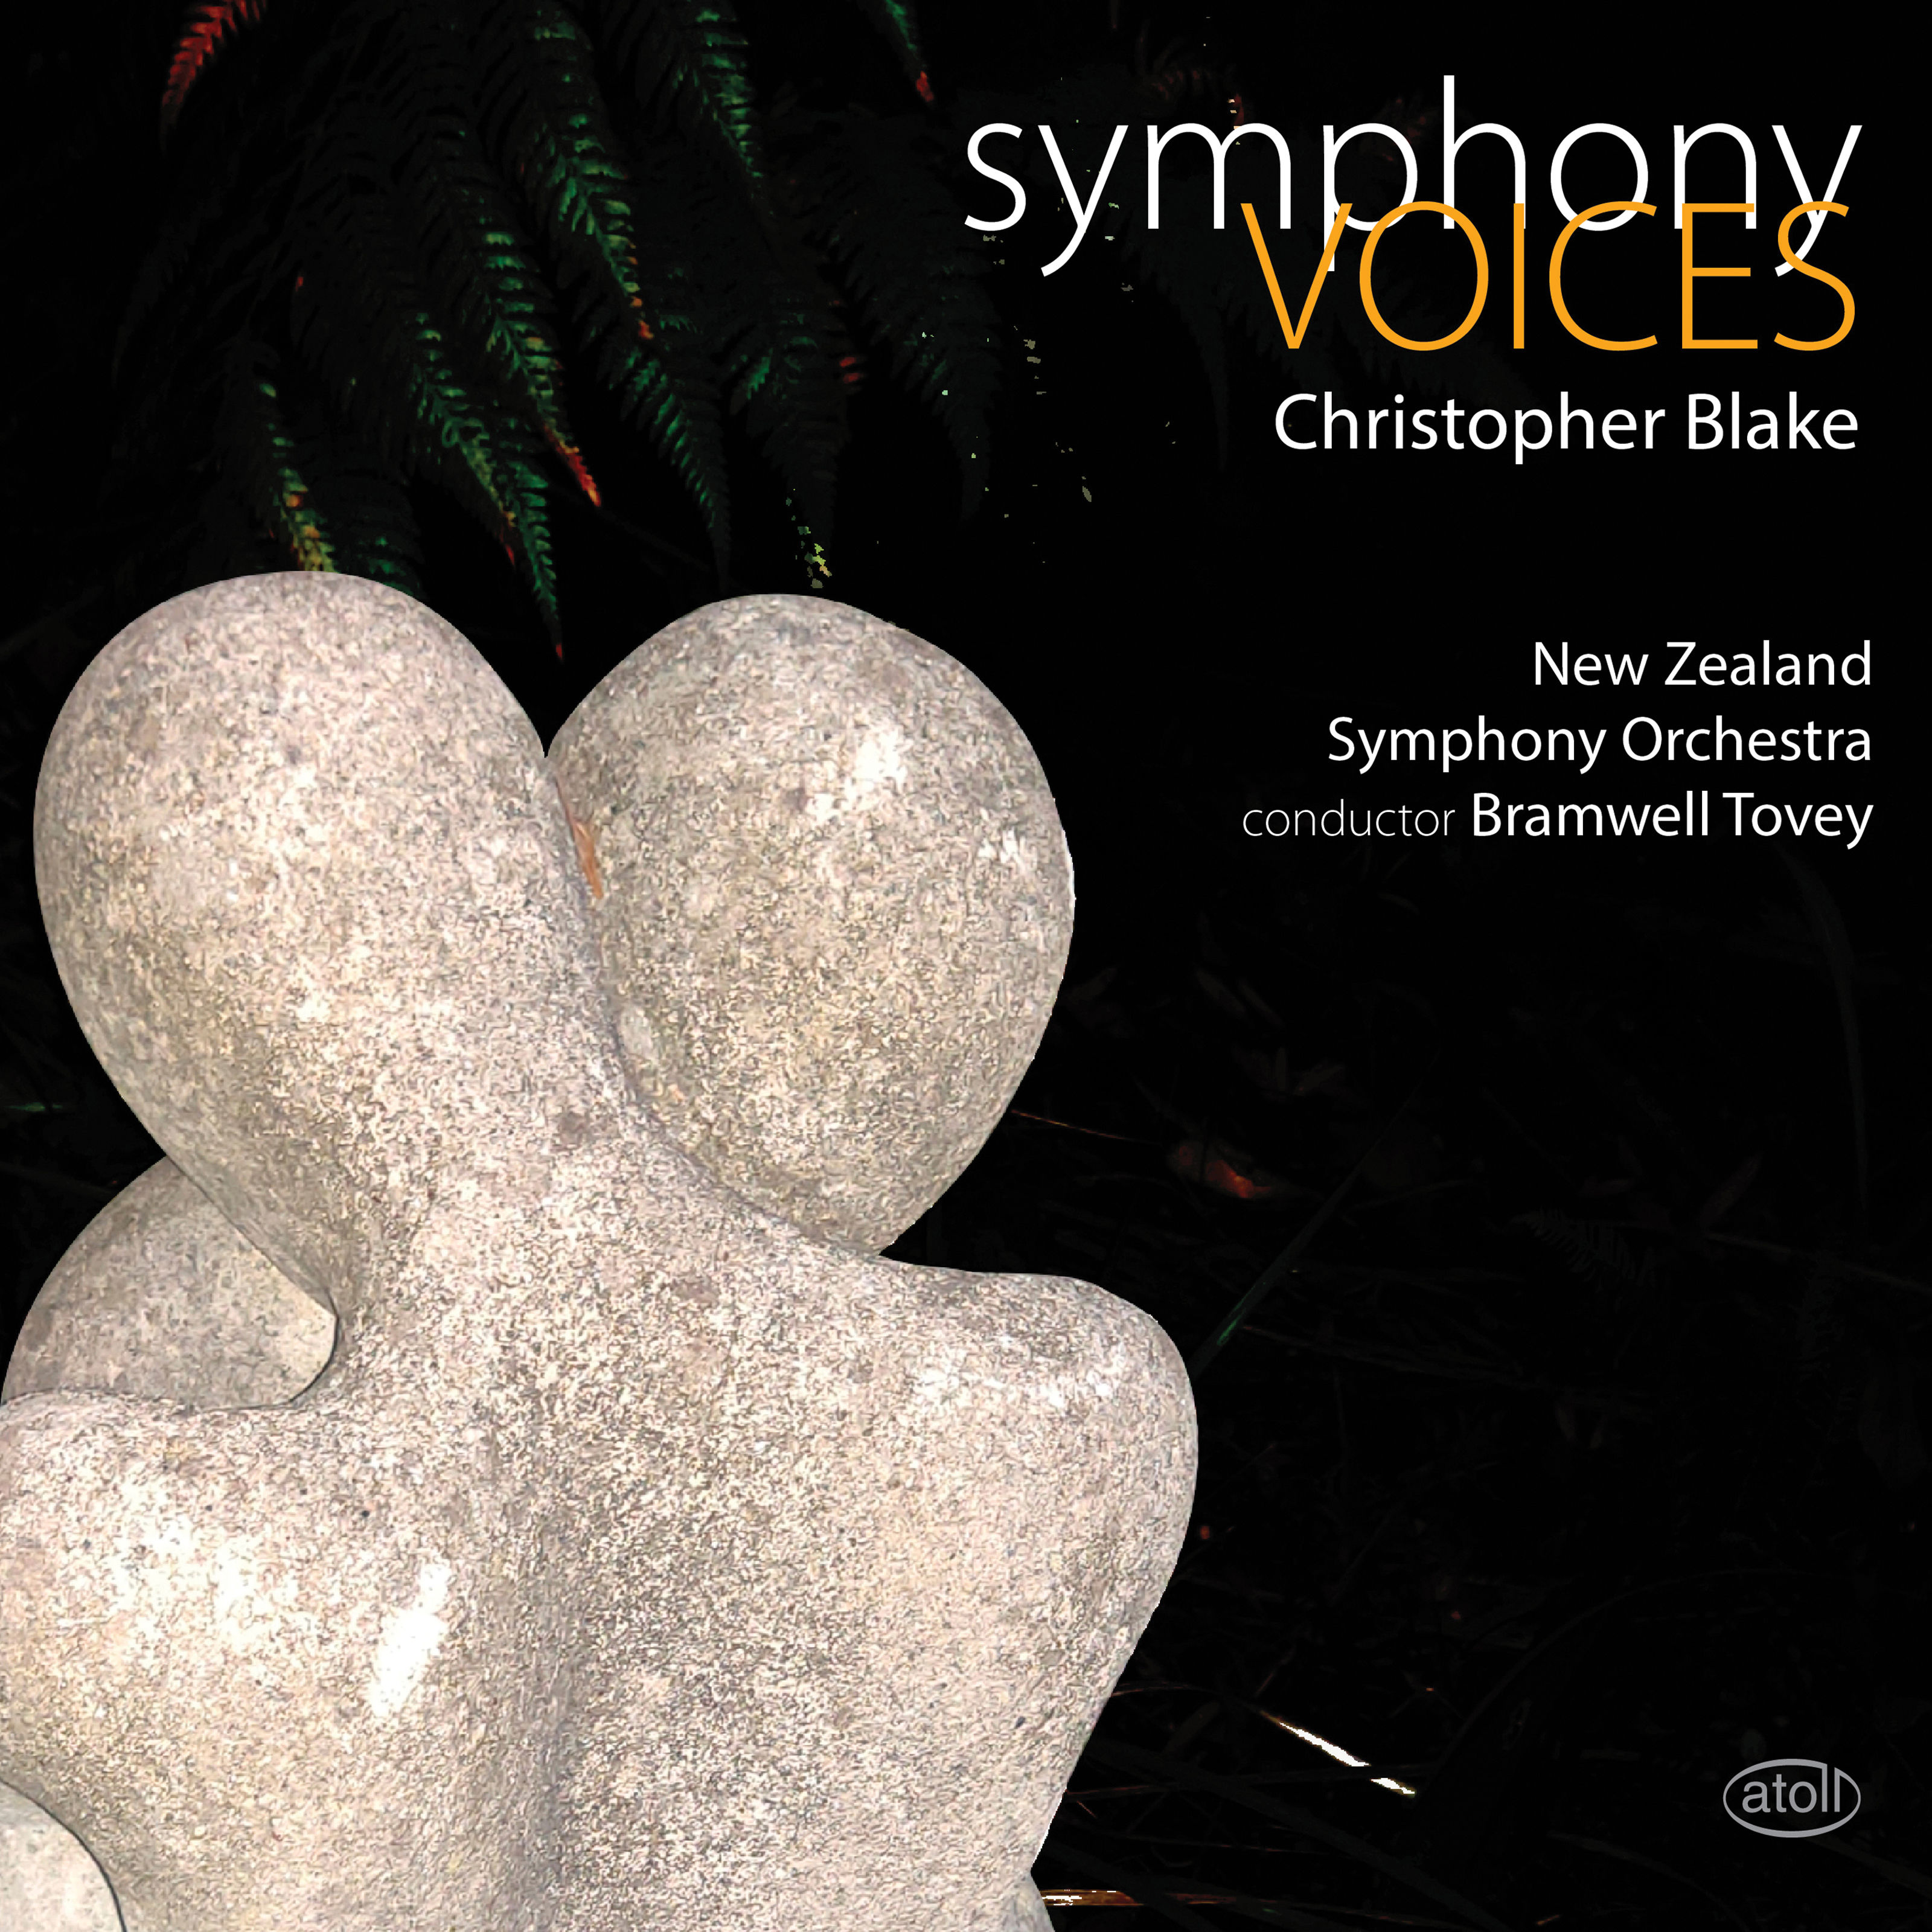 New Zealand Symphony Orchestra & Bramwell Tovey – Christopher Blake: Symphony – Voices (Live) (2019) [FLAC 24bit/48kHz]